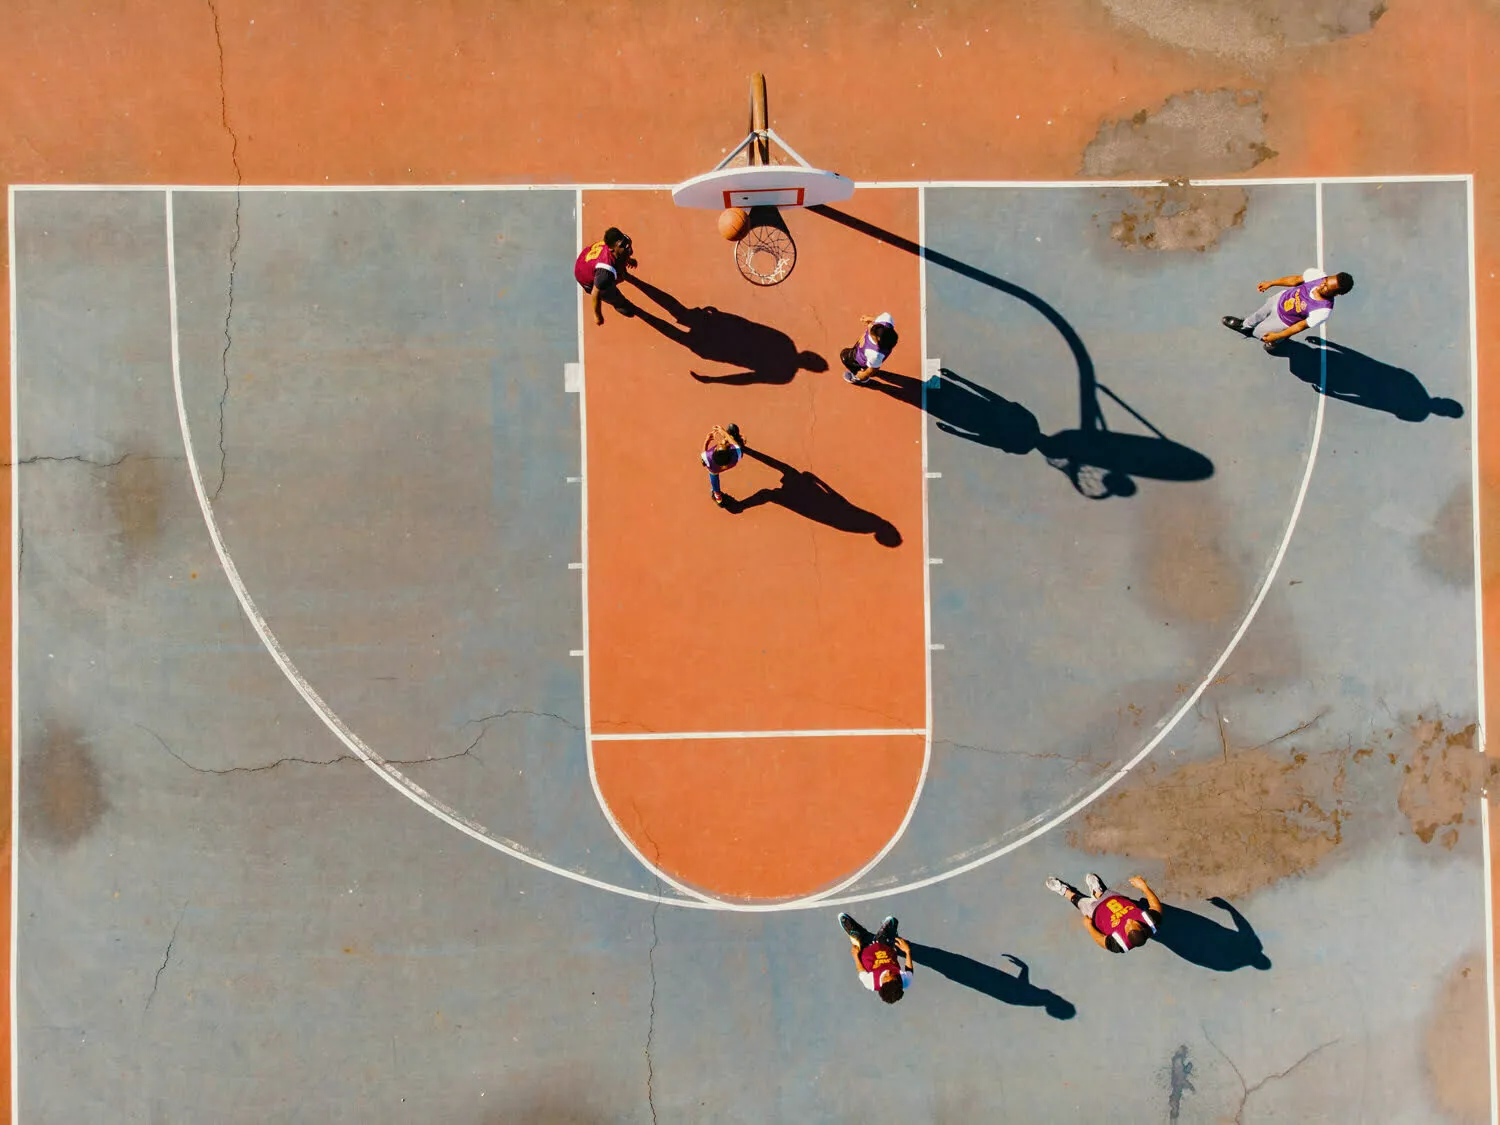 A team plays basketball on basketball court.